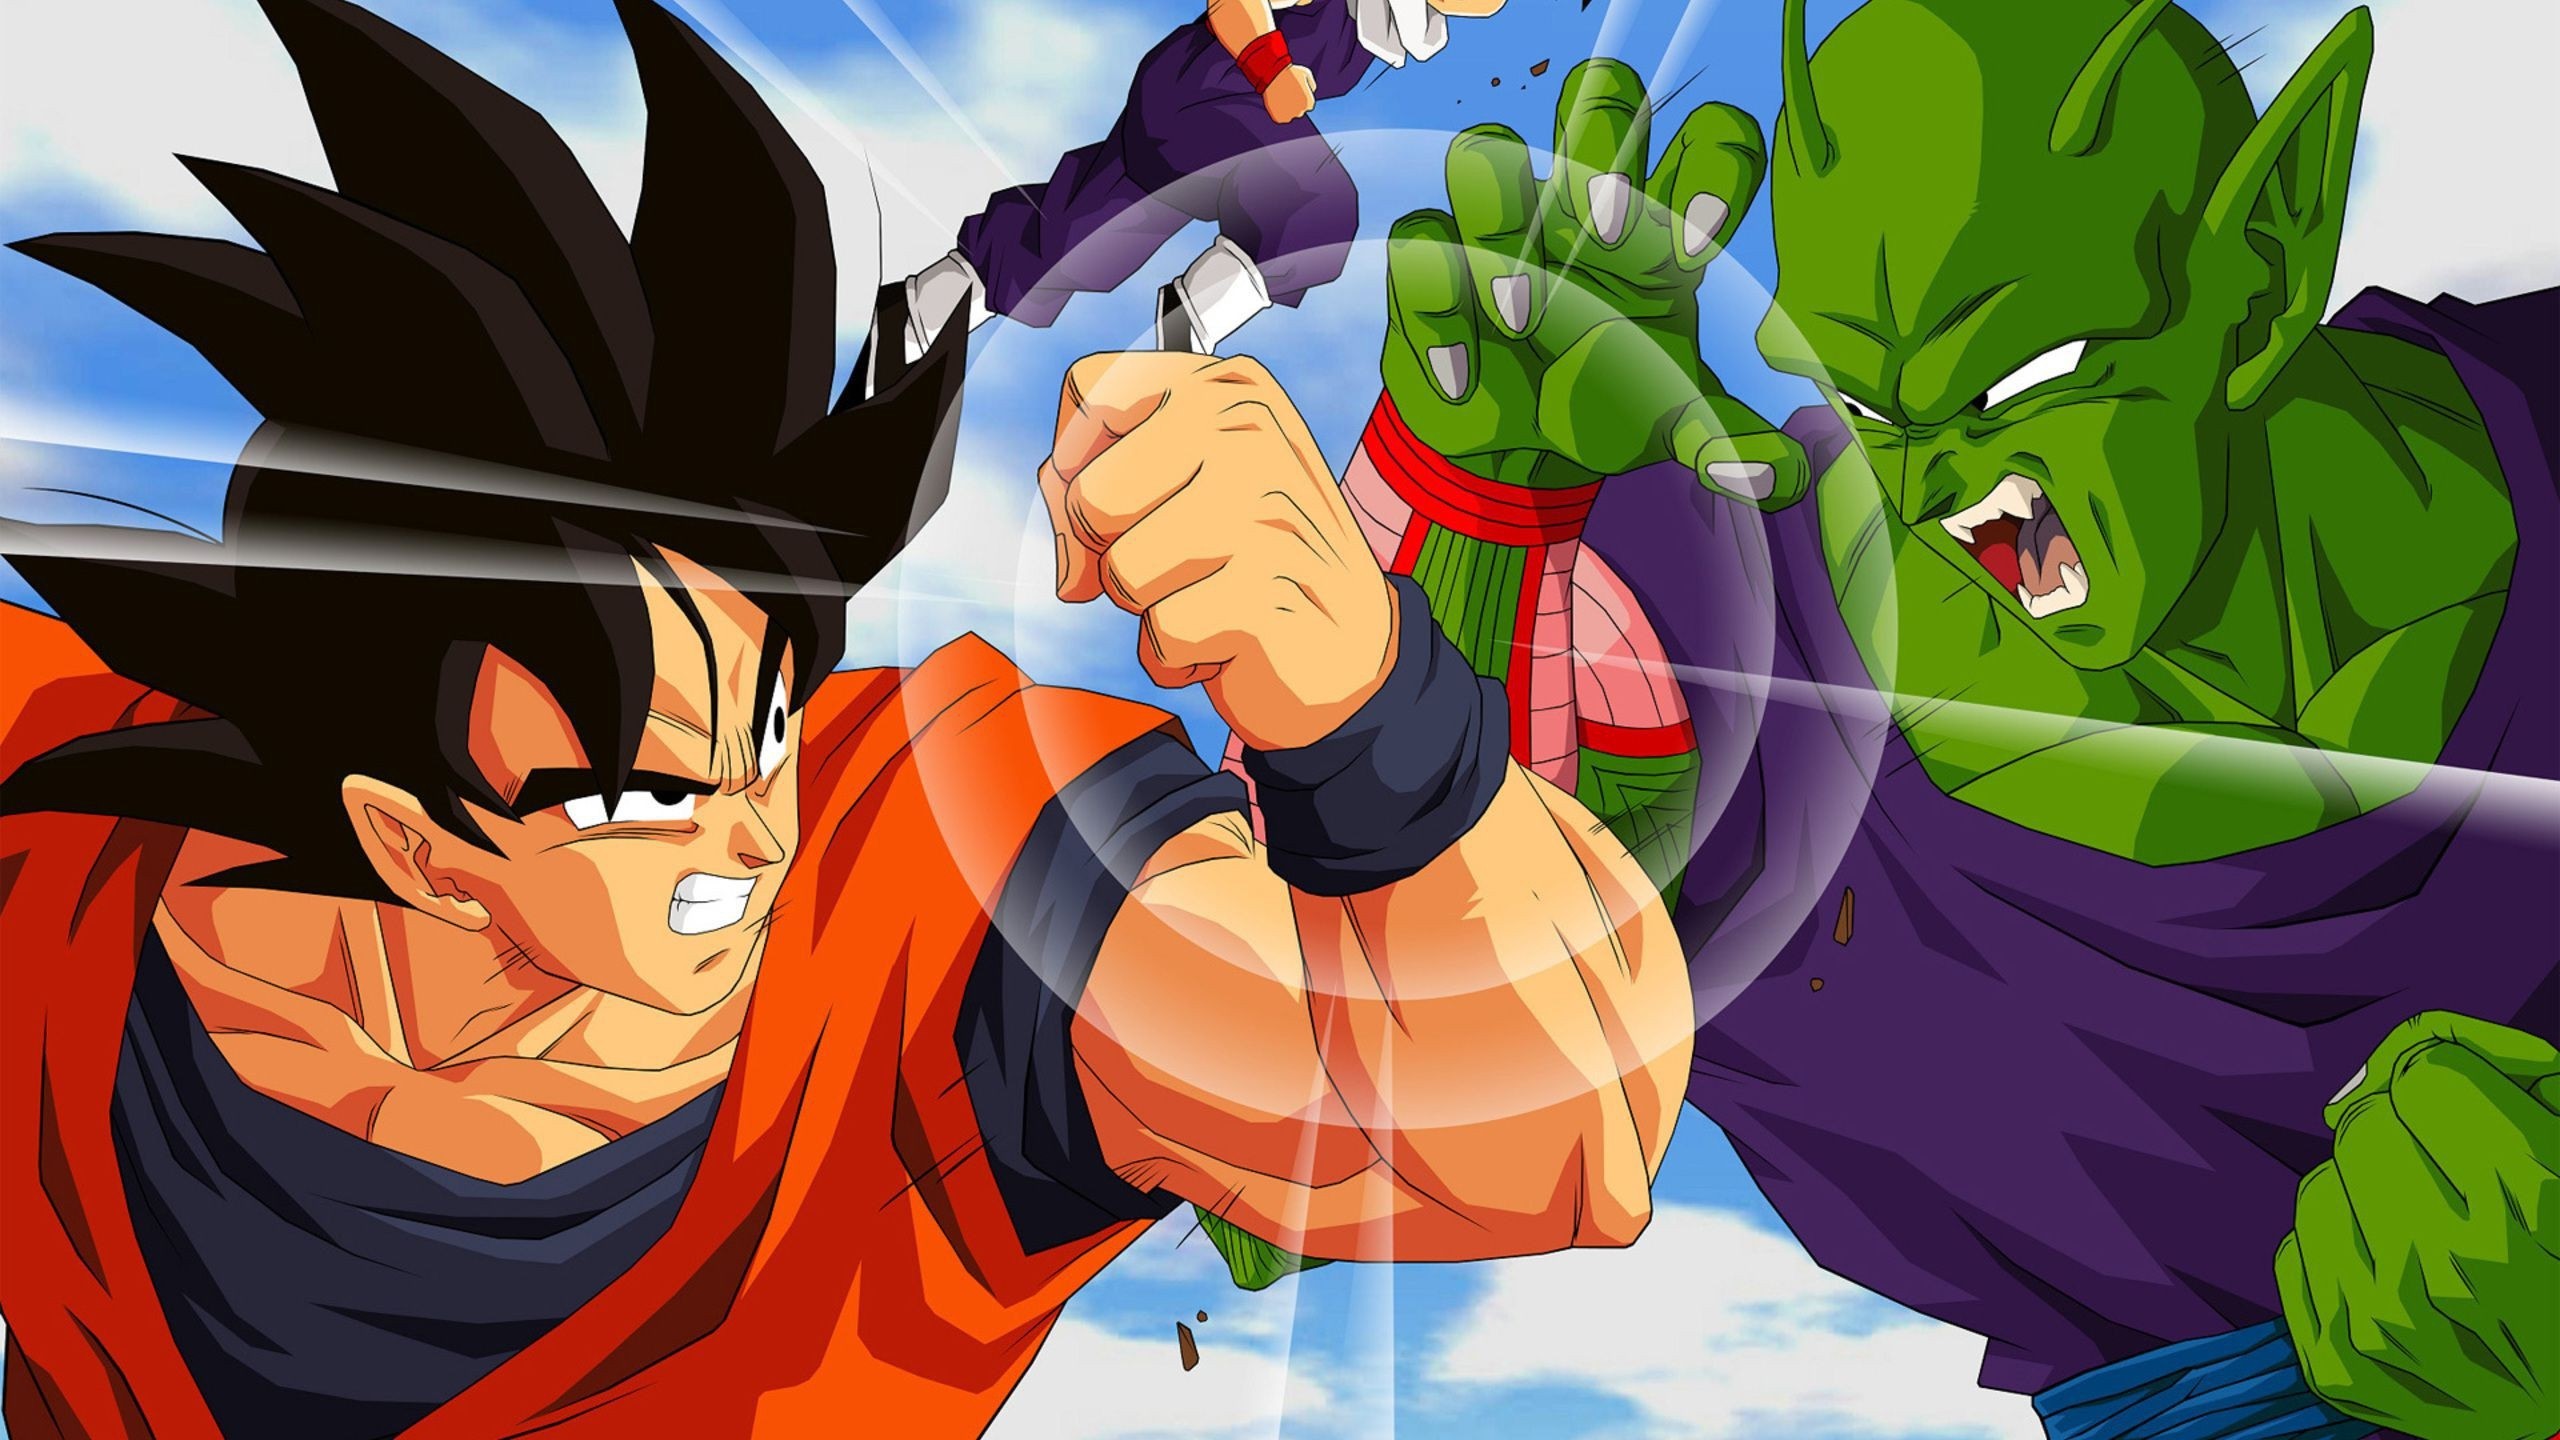 Piccolo vs Goku